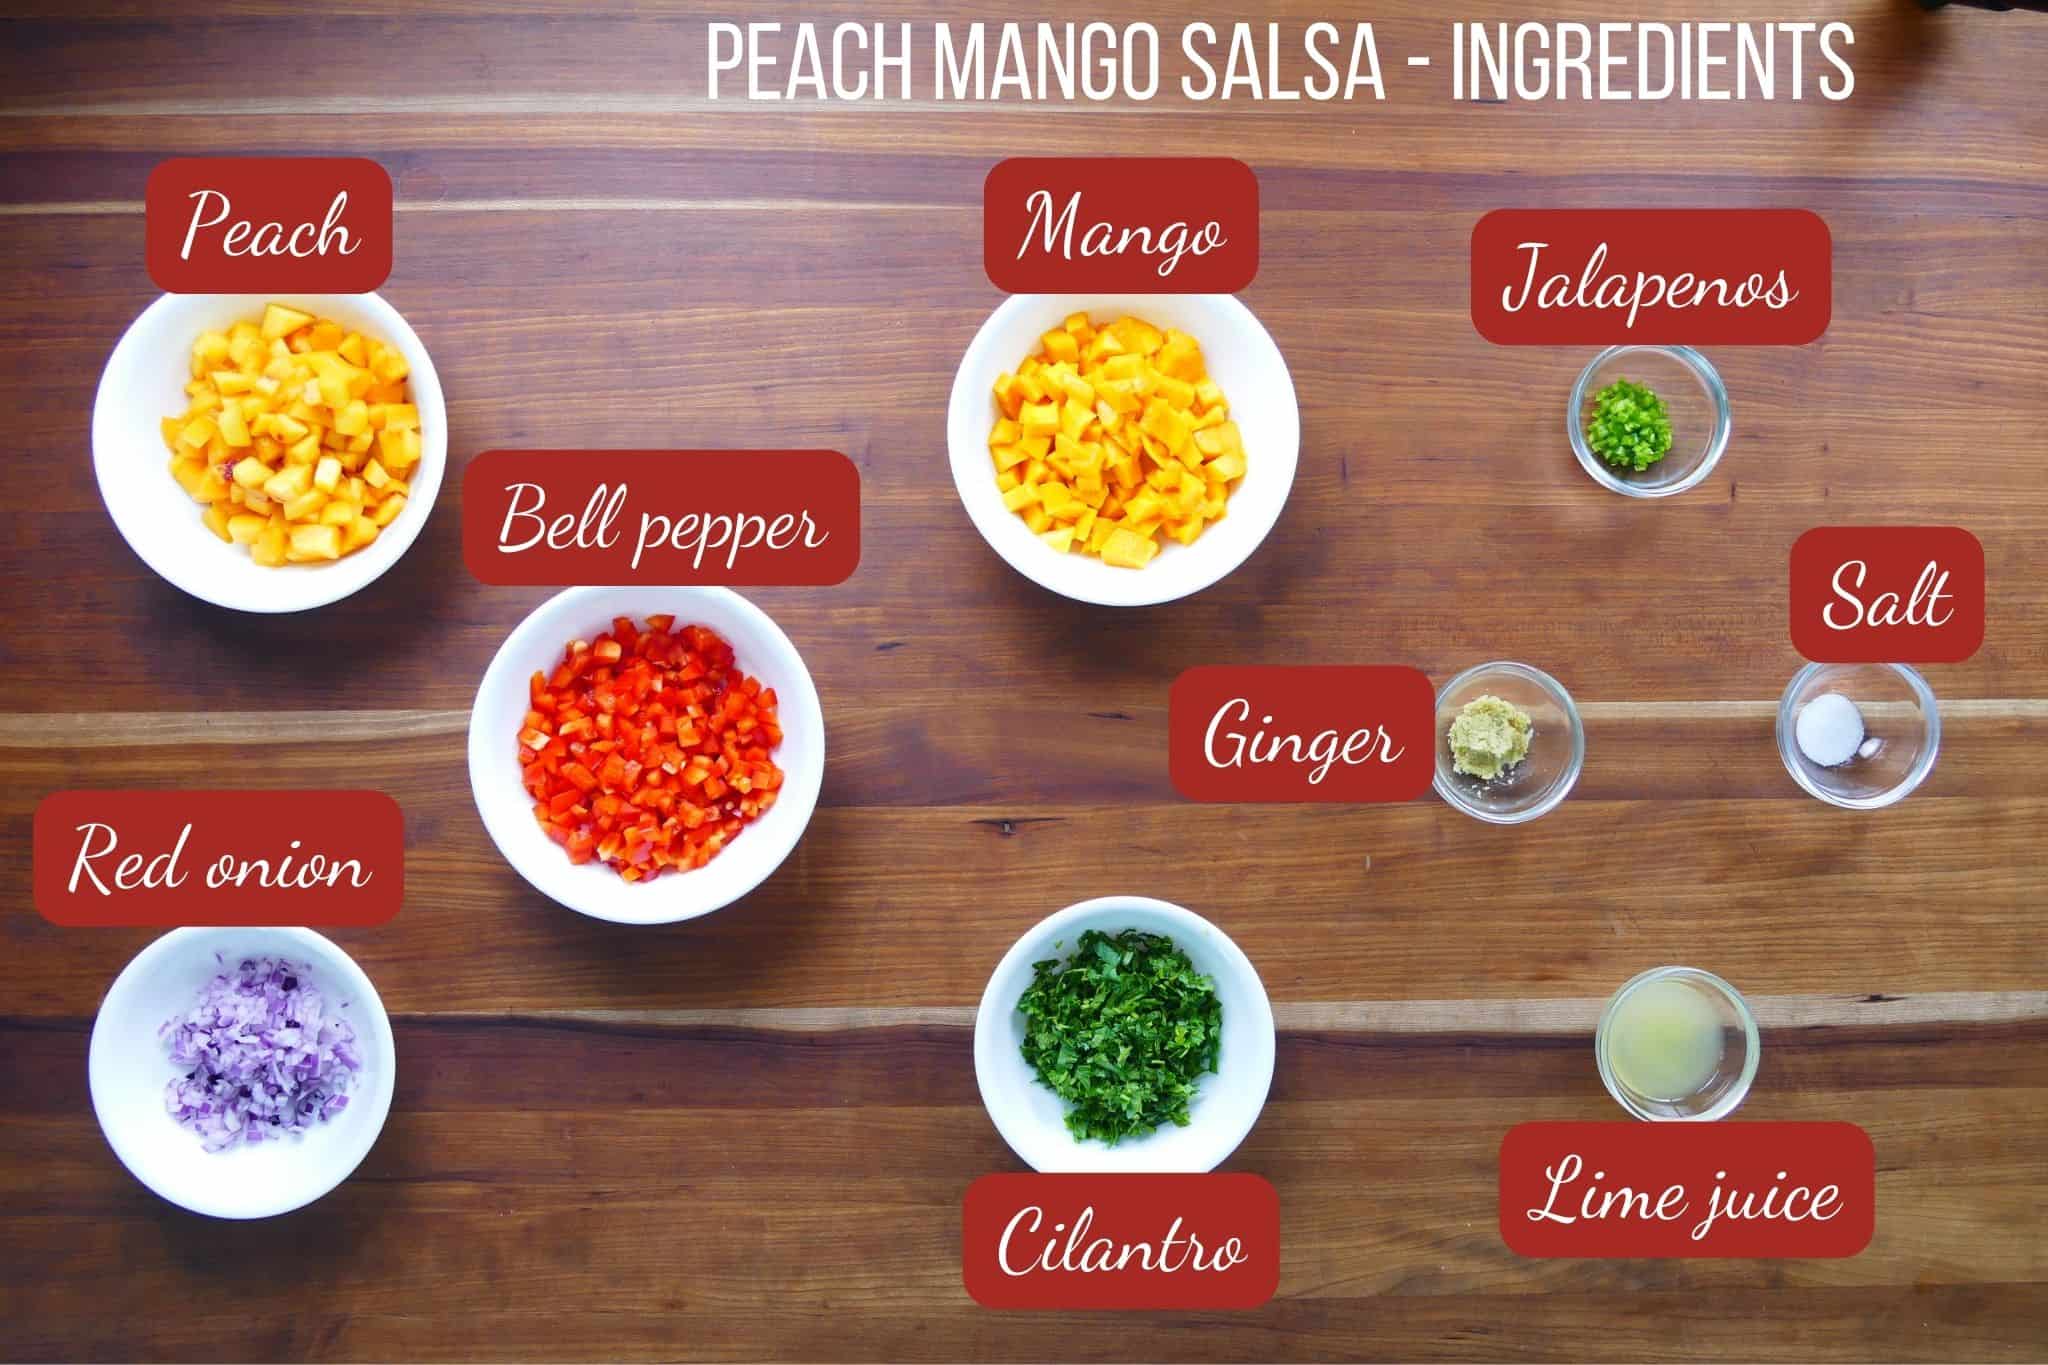 Peach mango salsa ingredients - peach, mango, jalapenos, bell pepper, ginger, salt, red onion, cilantro, lime juices.